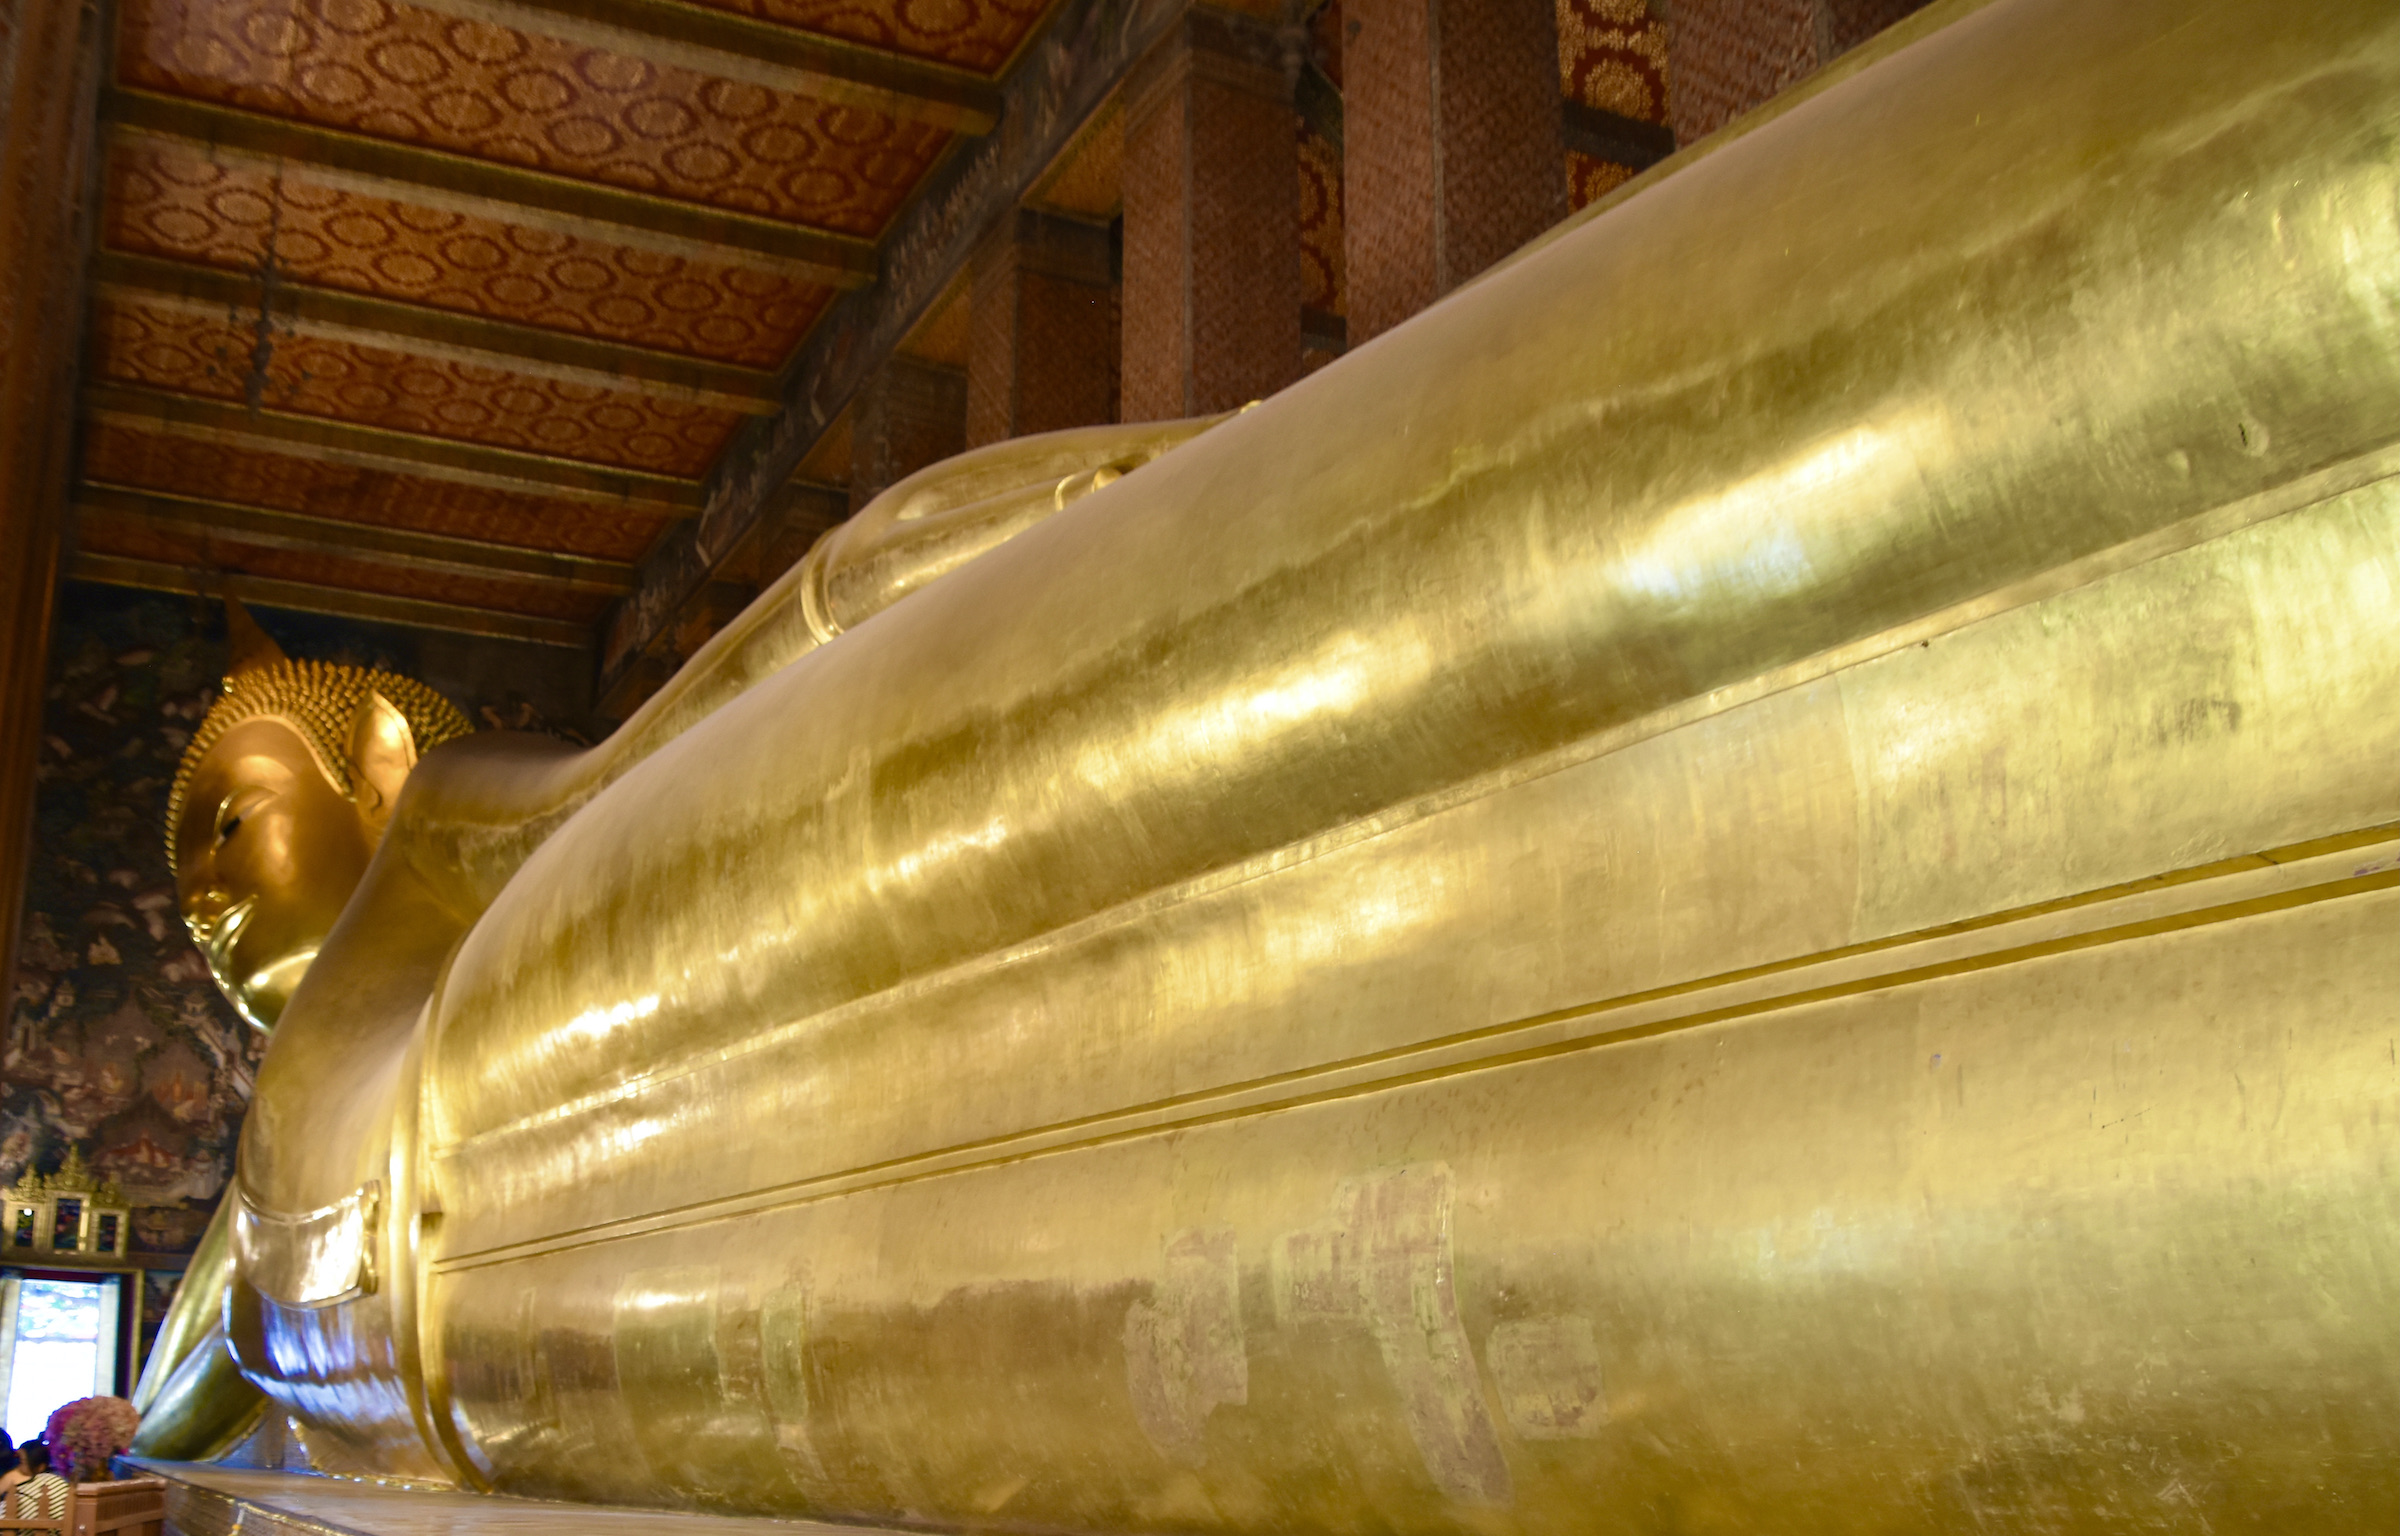 The Reclining Buddha of Wat Pho